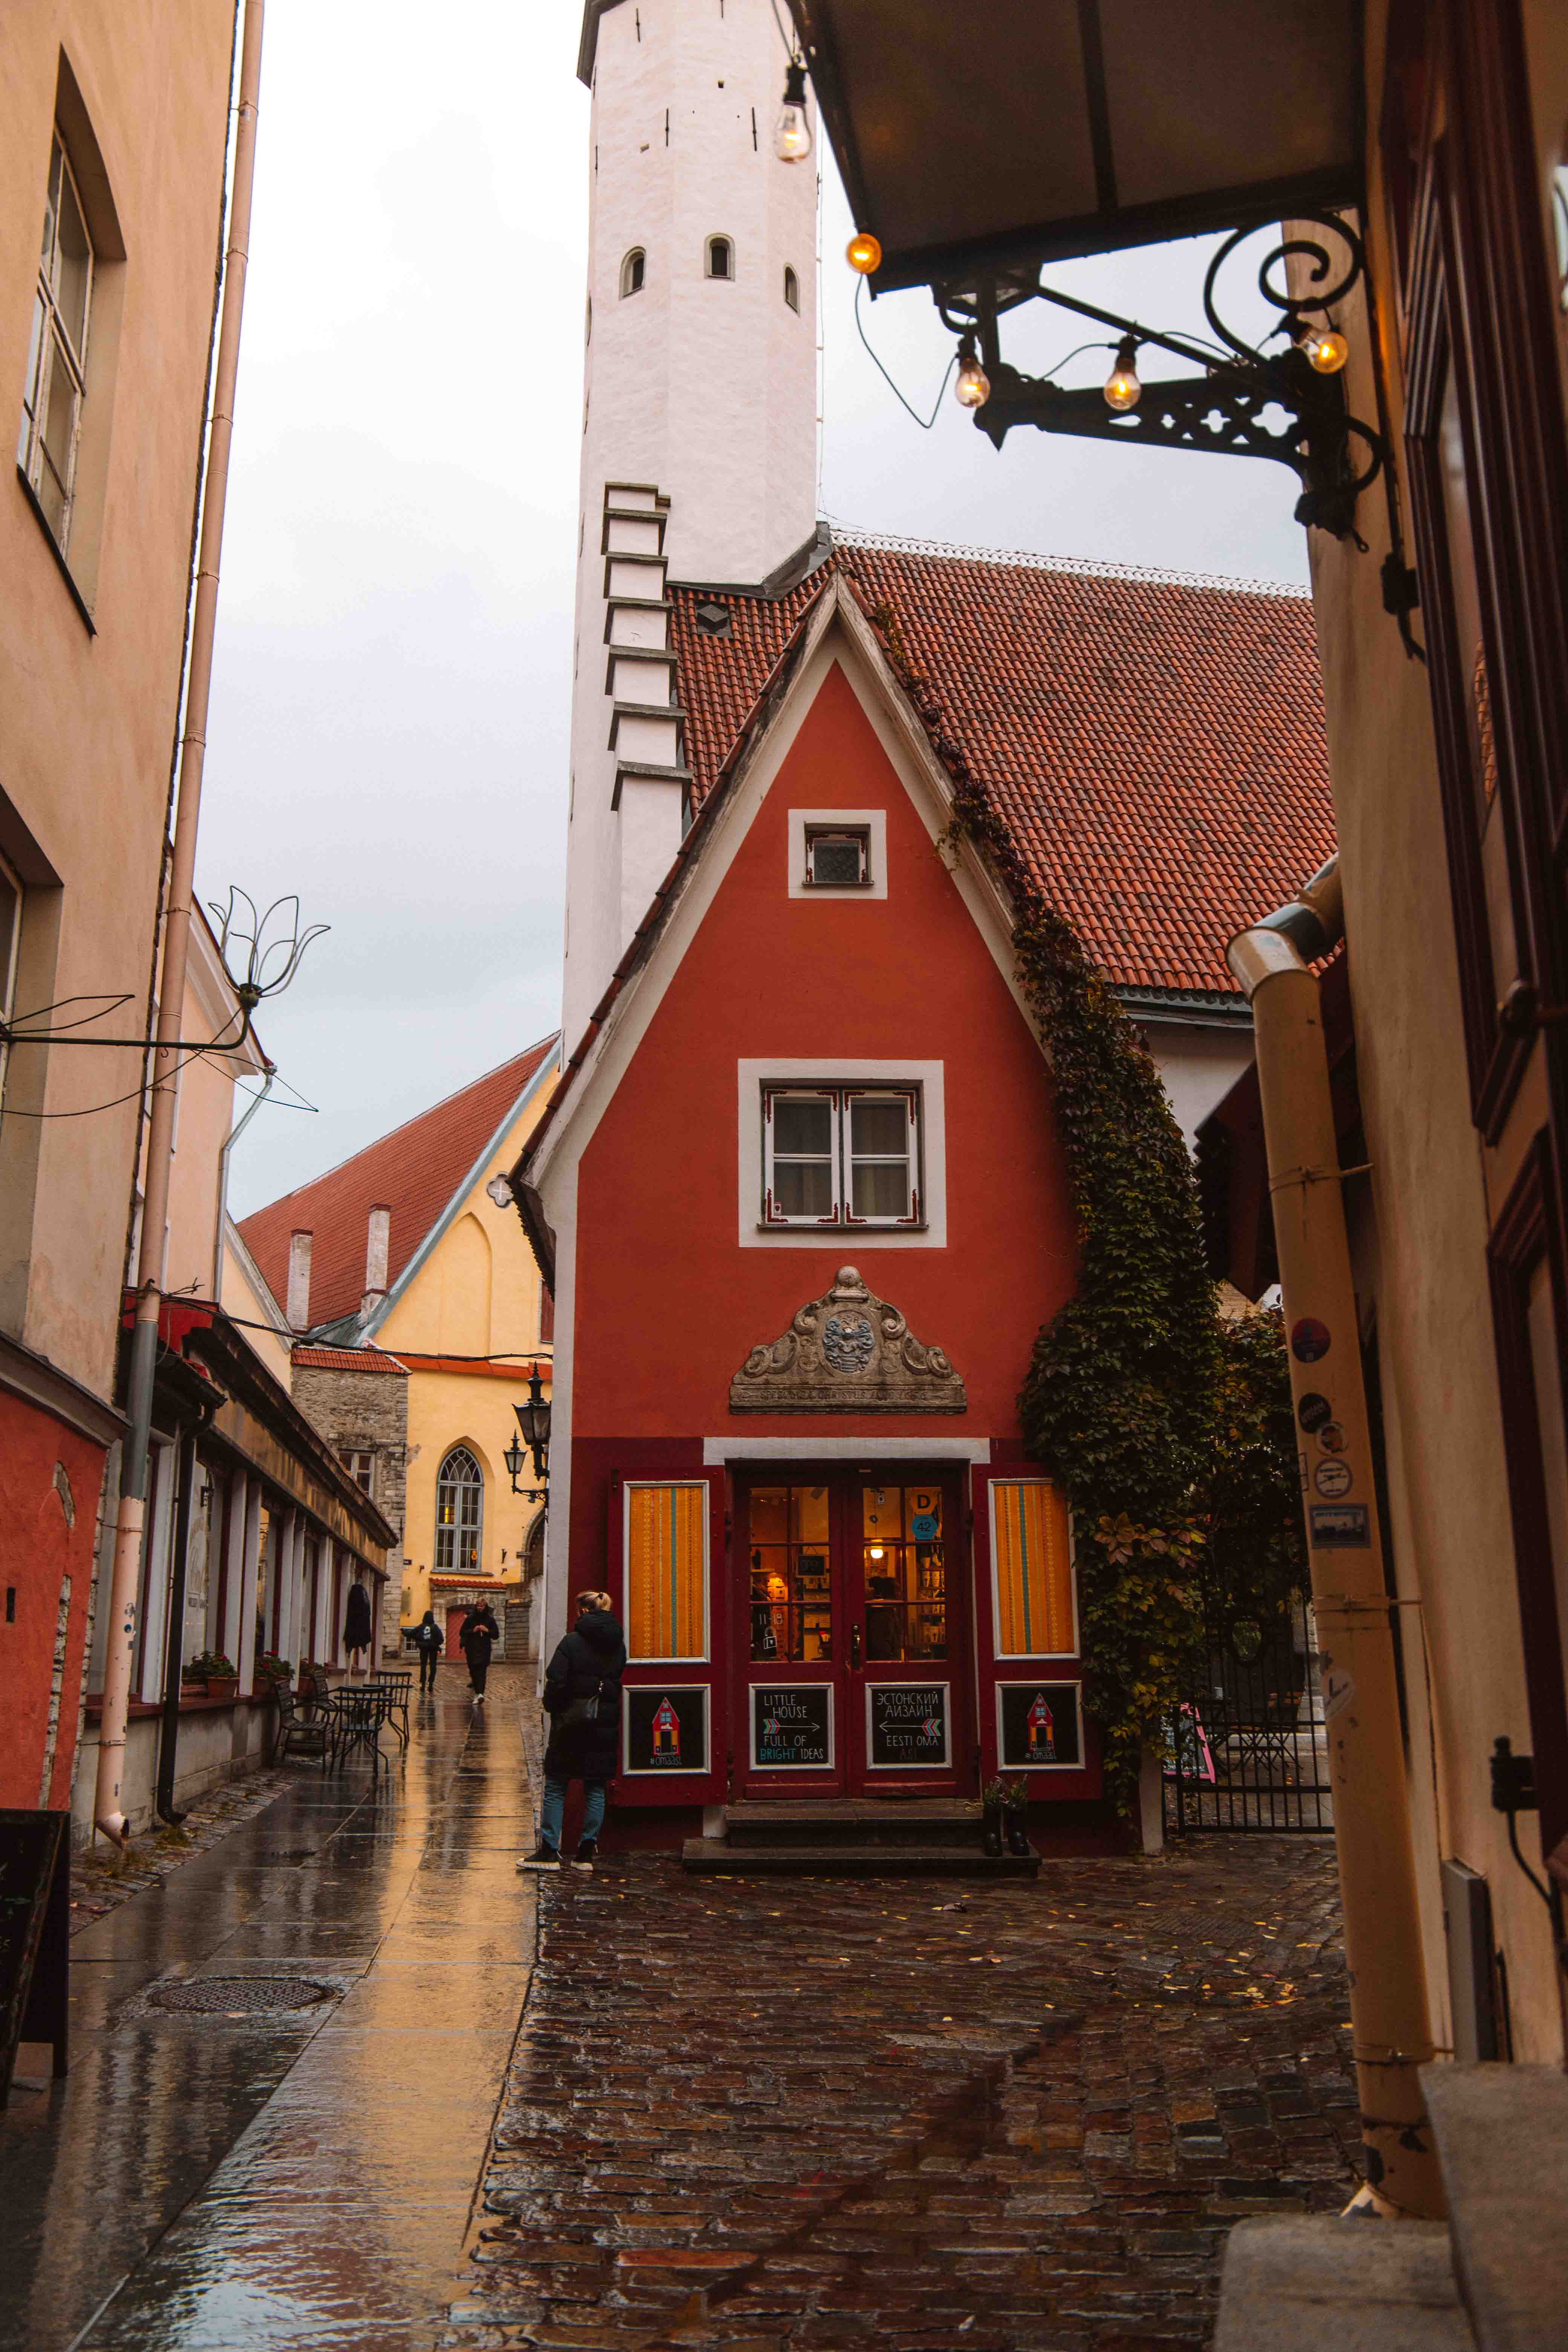 Saiakang Tallinn red building in old town